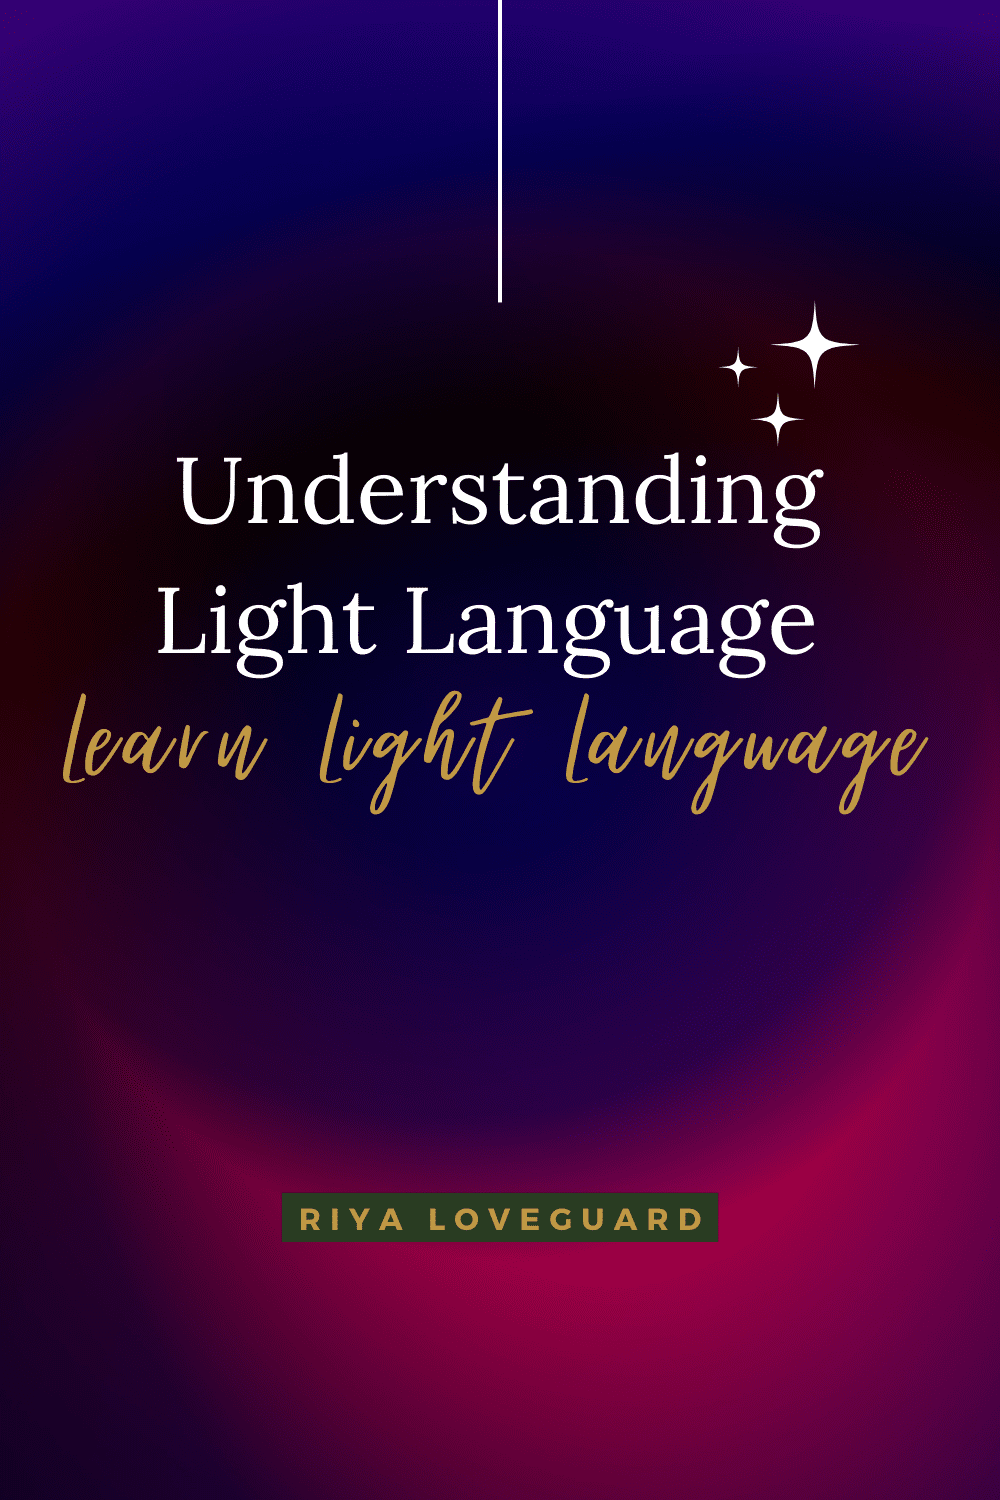 Understanding Light Language (Learn Light Language) | Riya Loveguard HD Wallpaper